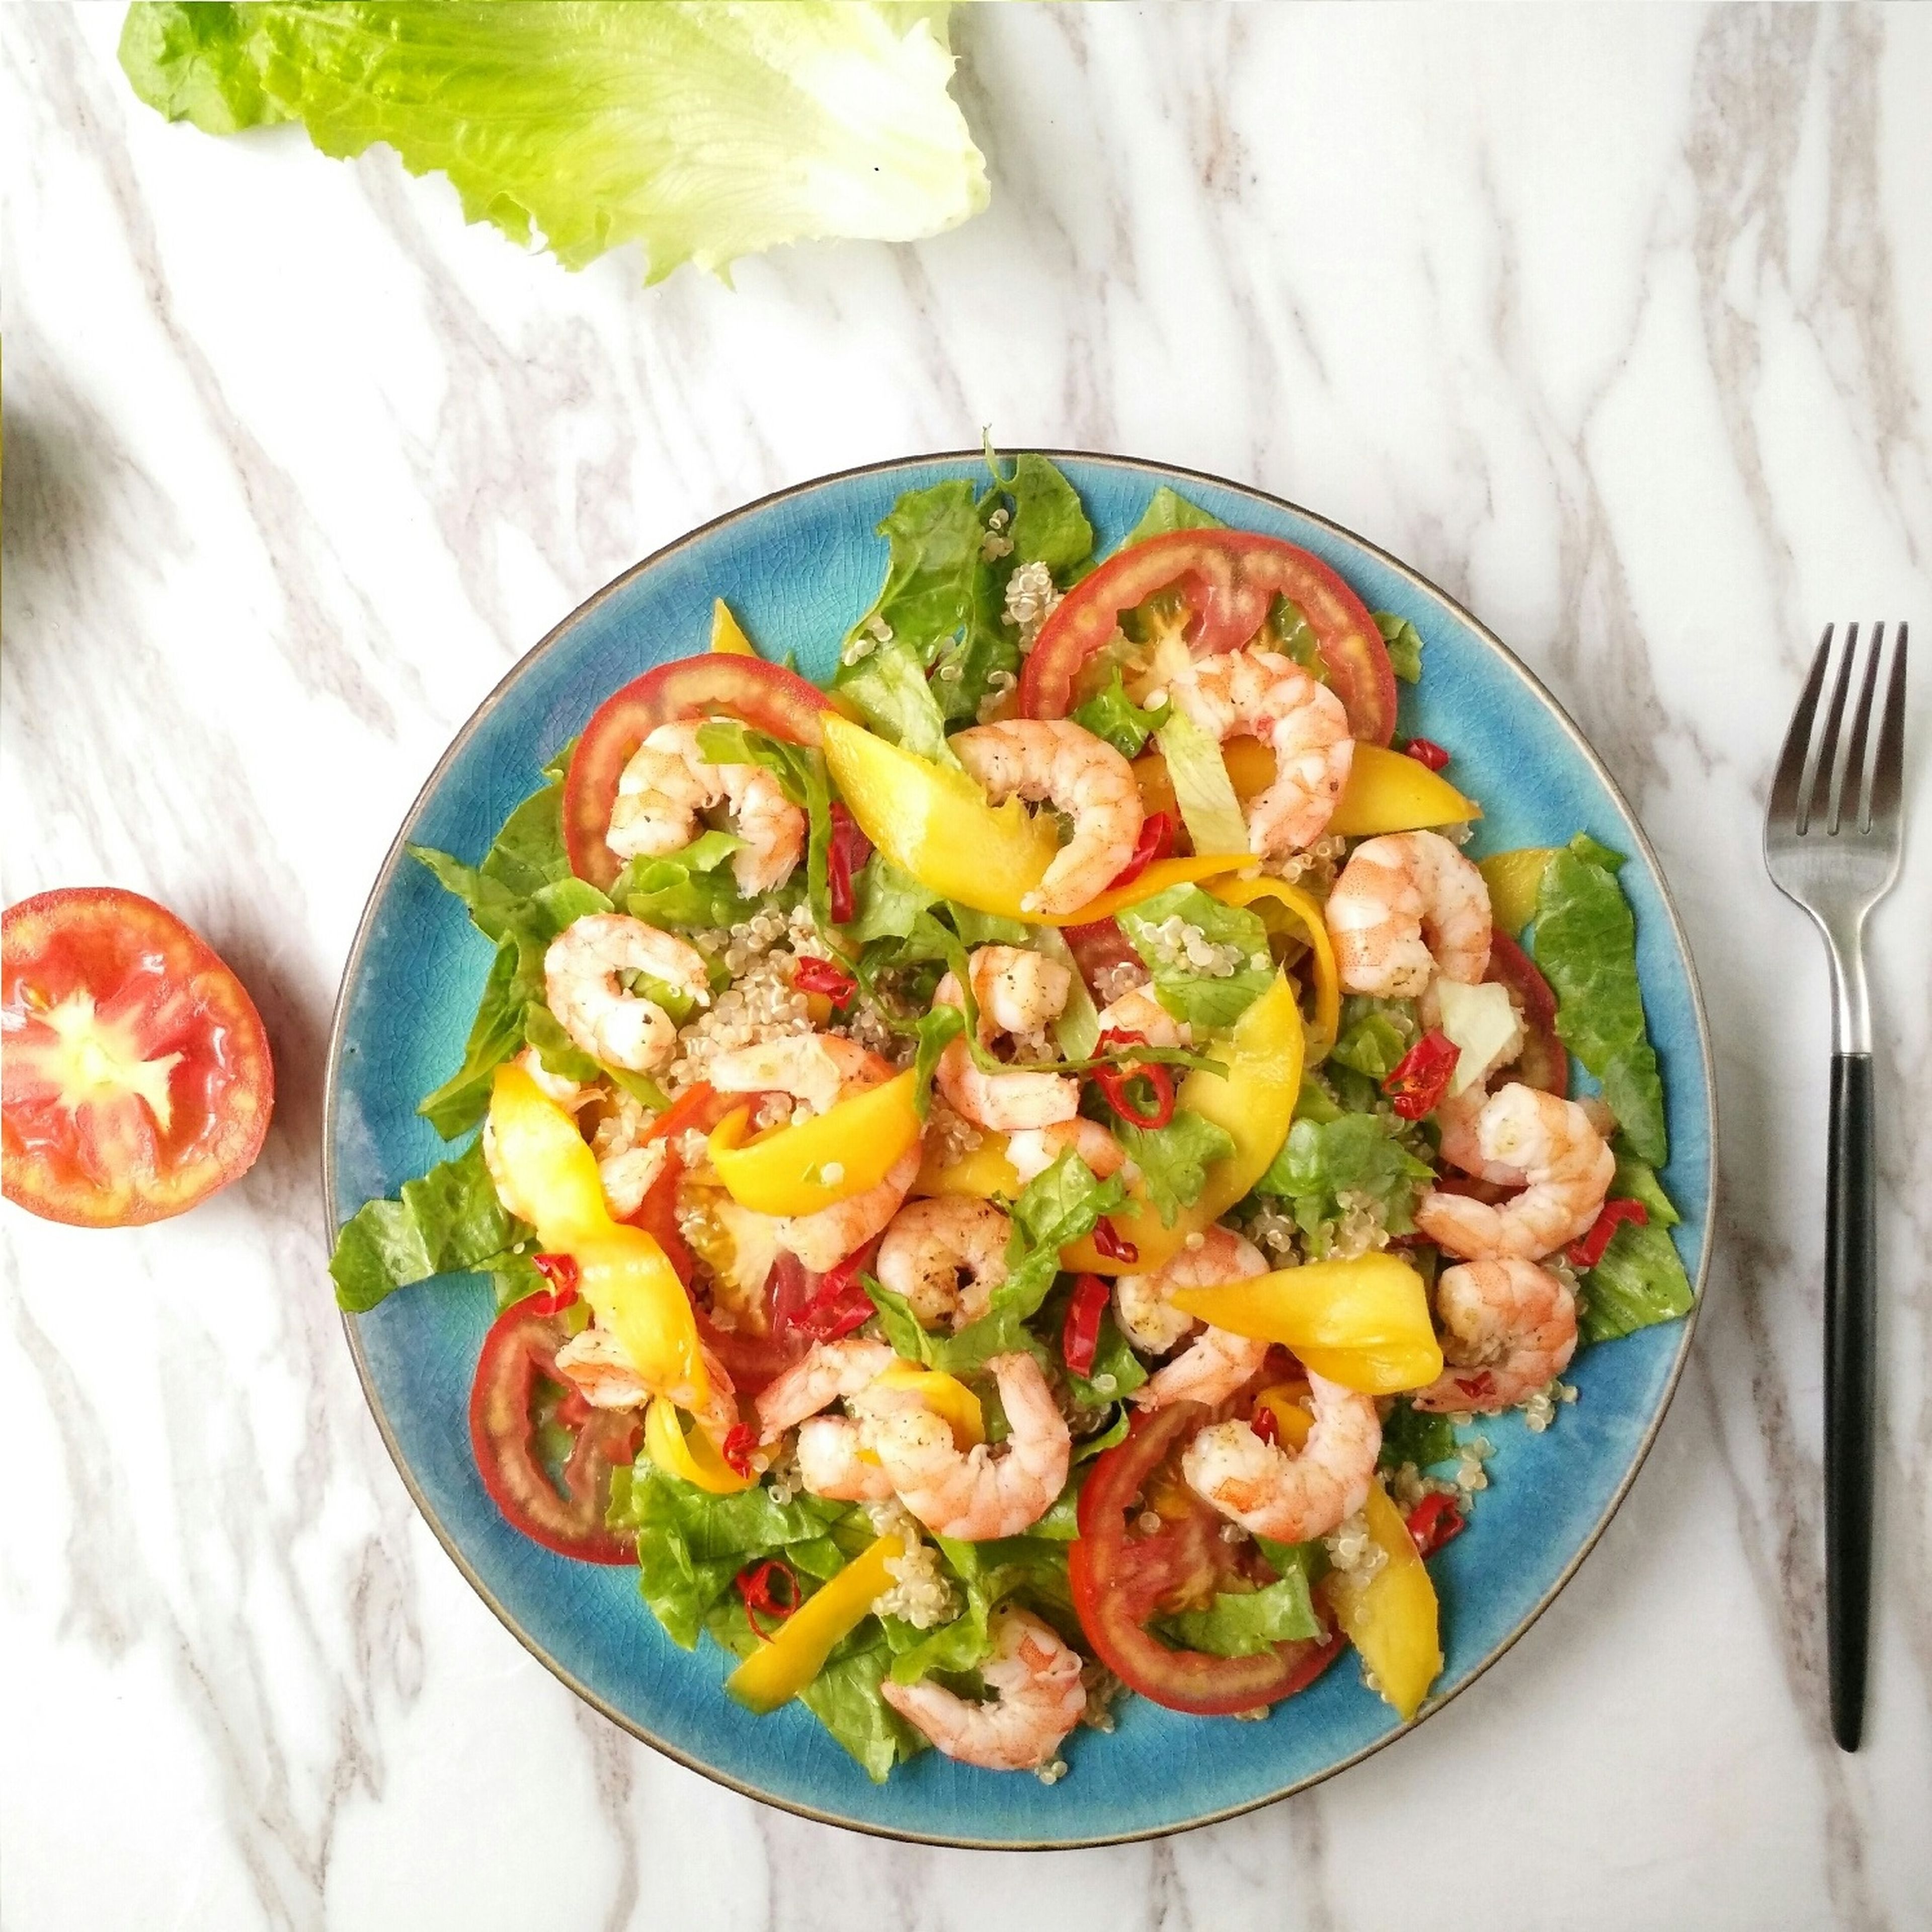 Marinated shrimp and vegetable salad